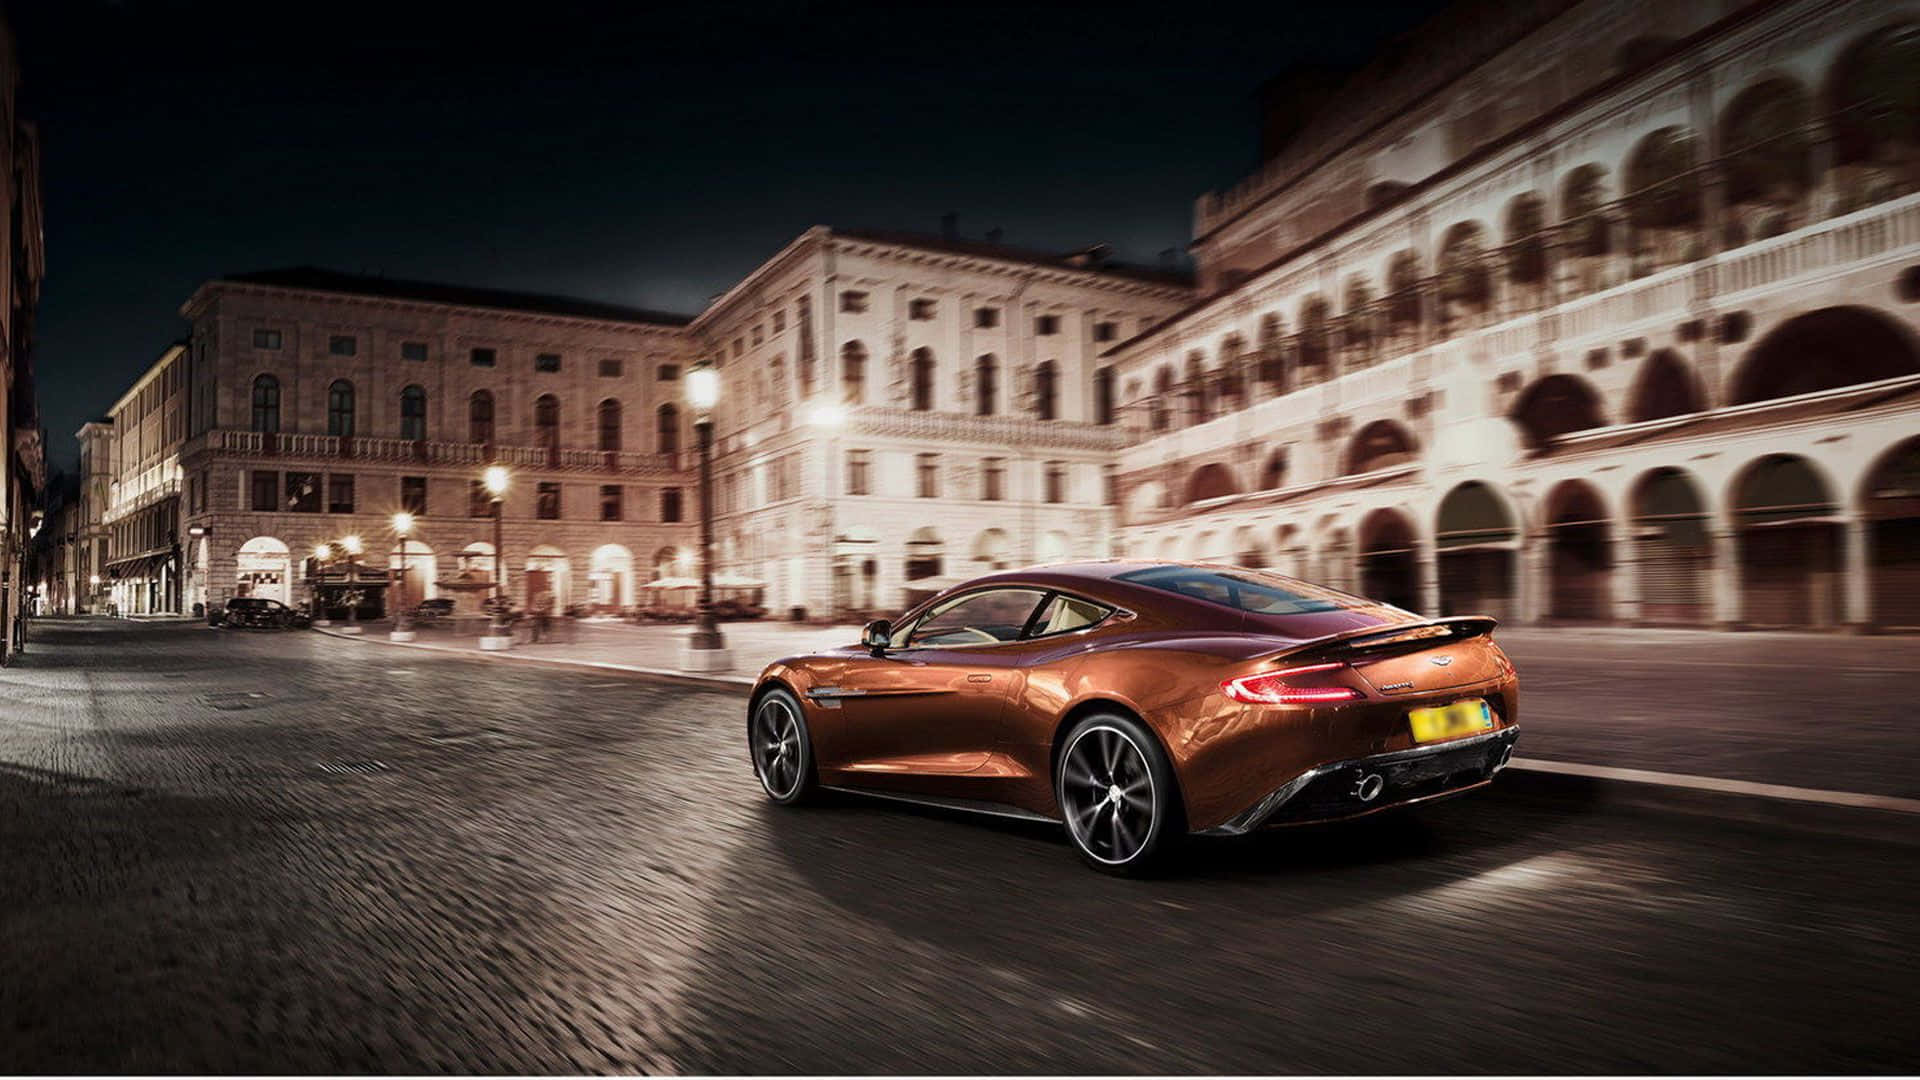 Sleek and Powerful Aston Martin Vanquish Wallpaper